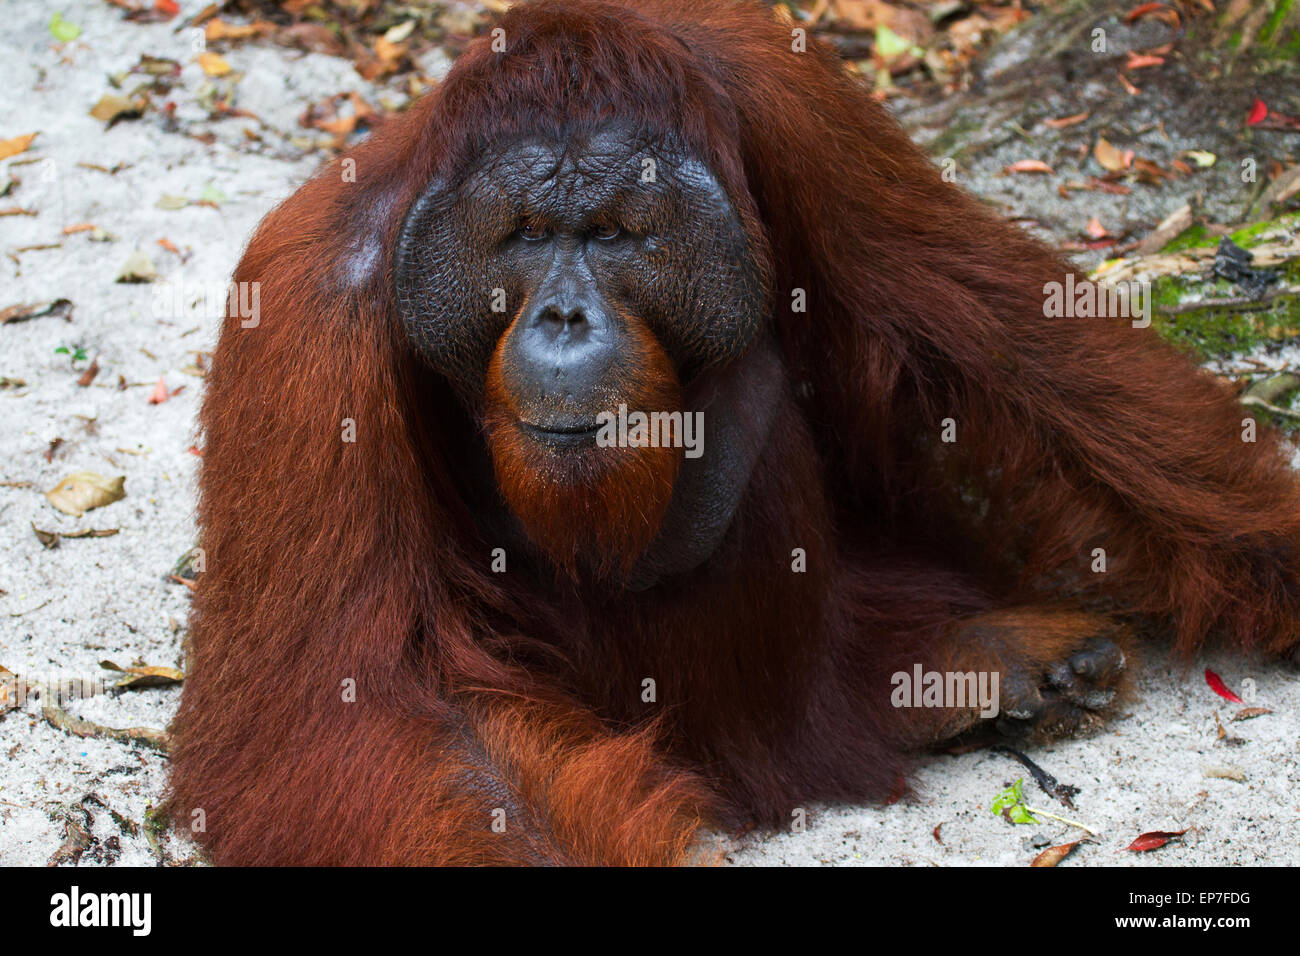 Large Orangutan with cheek pads Stock Photo